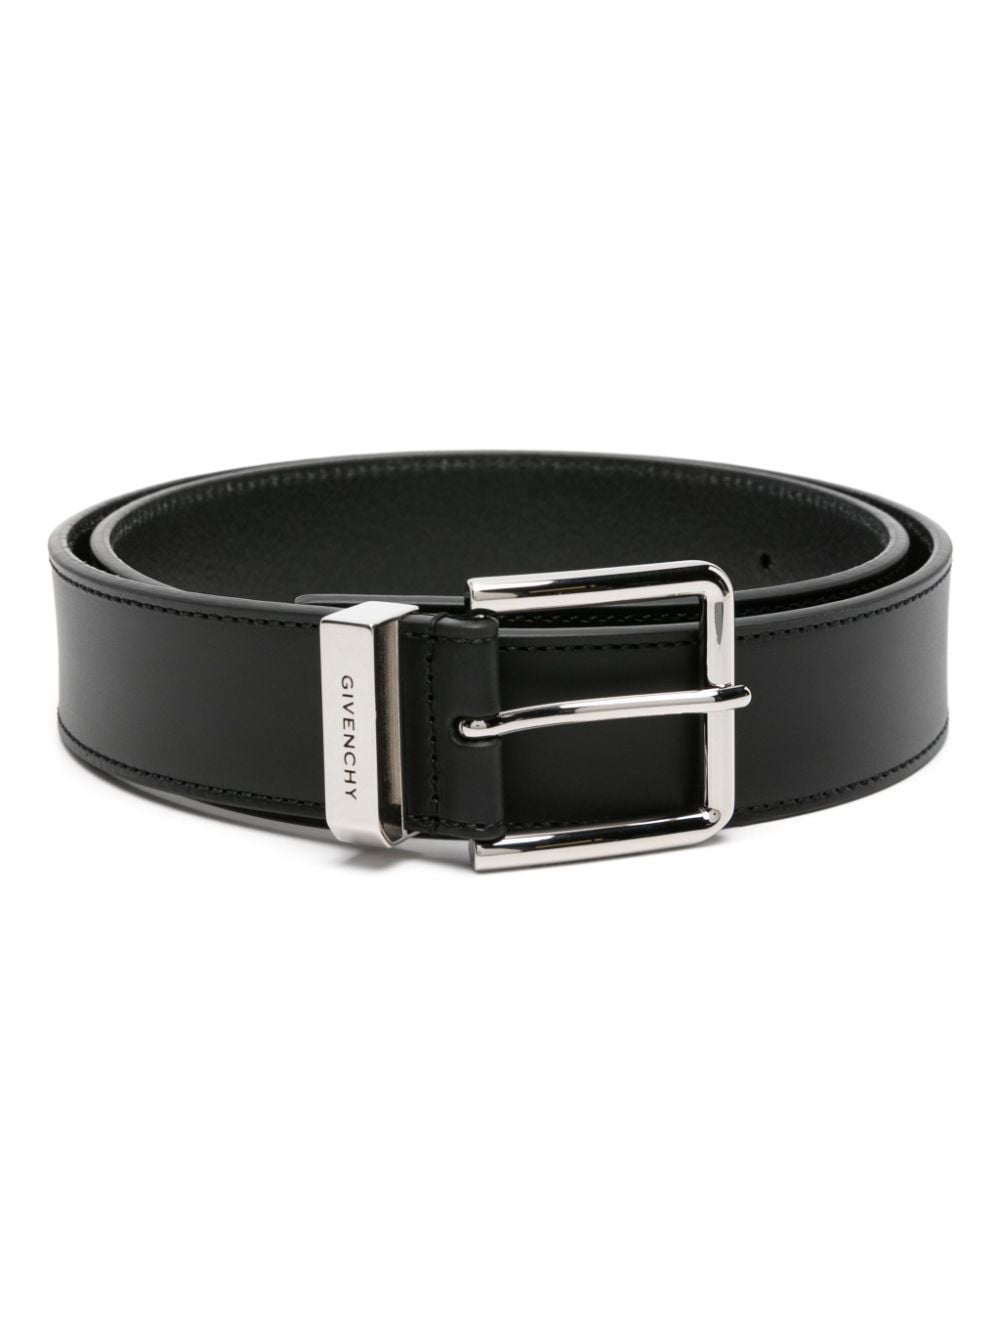 Givenchy Gentleman leather belt - Black von Givenchy